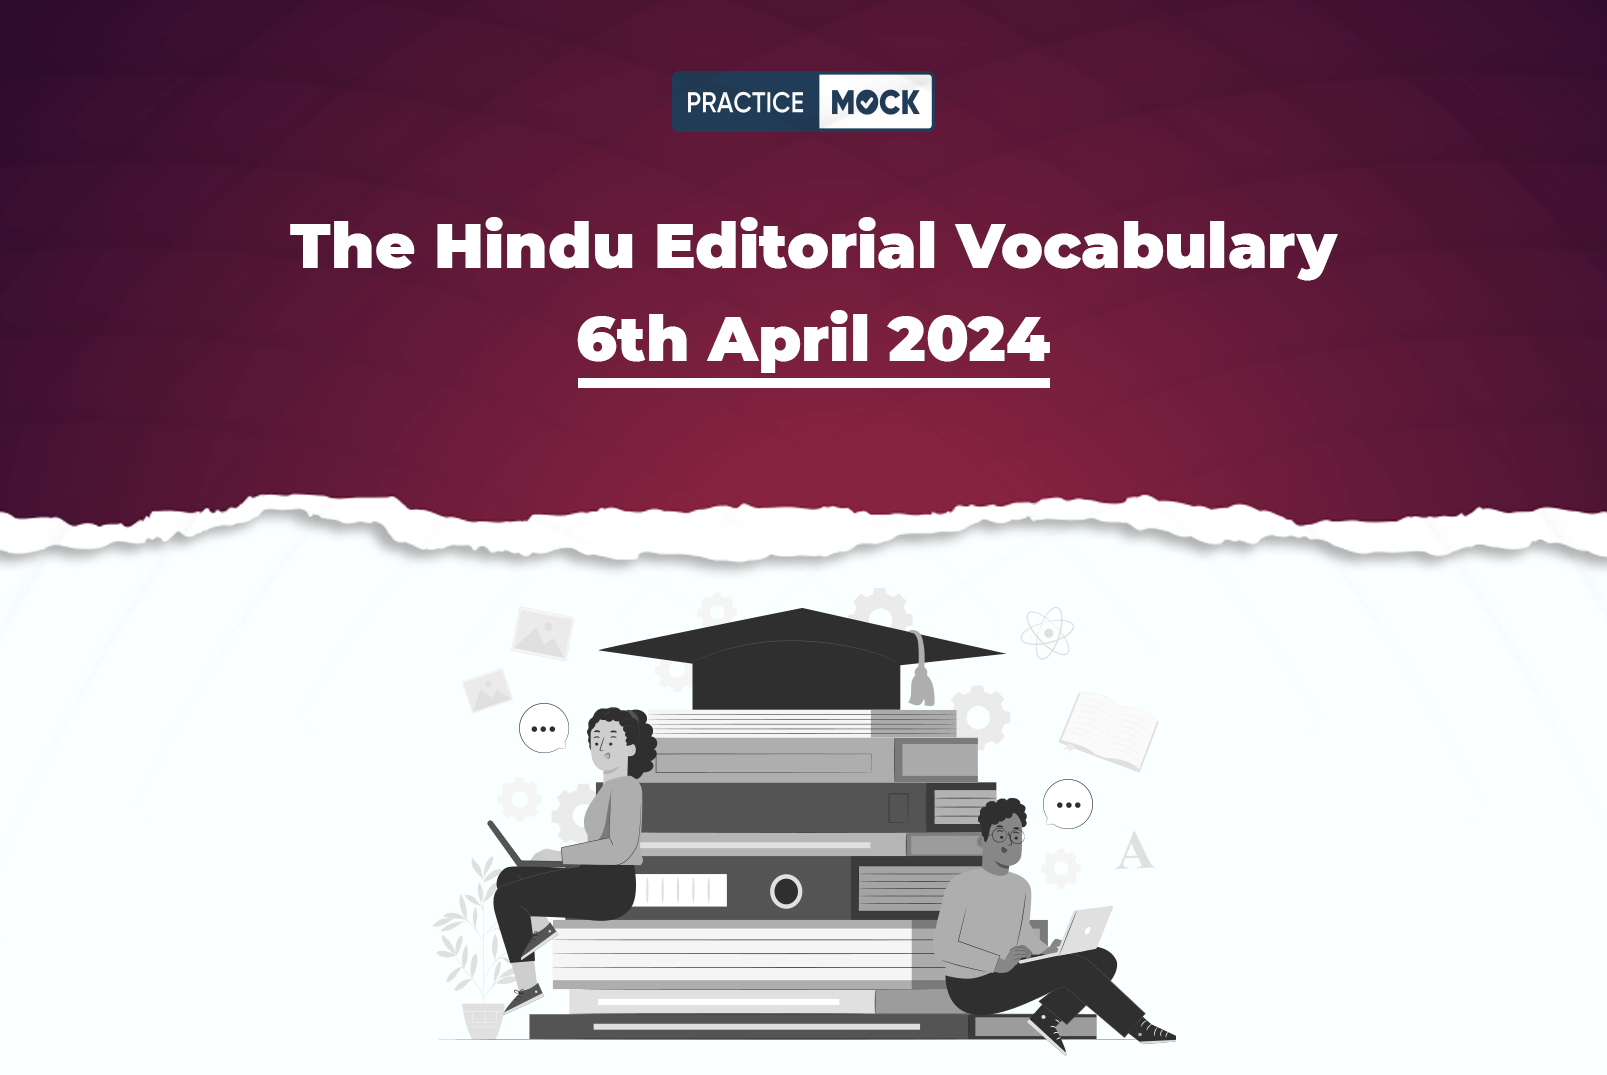 The Hindu Editorial Vocabulary 6th April 2024